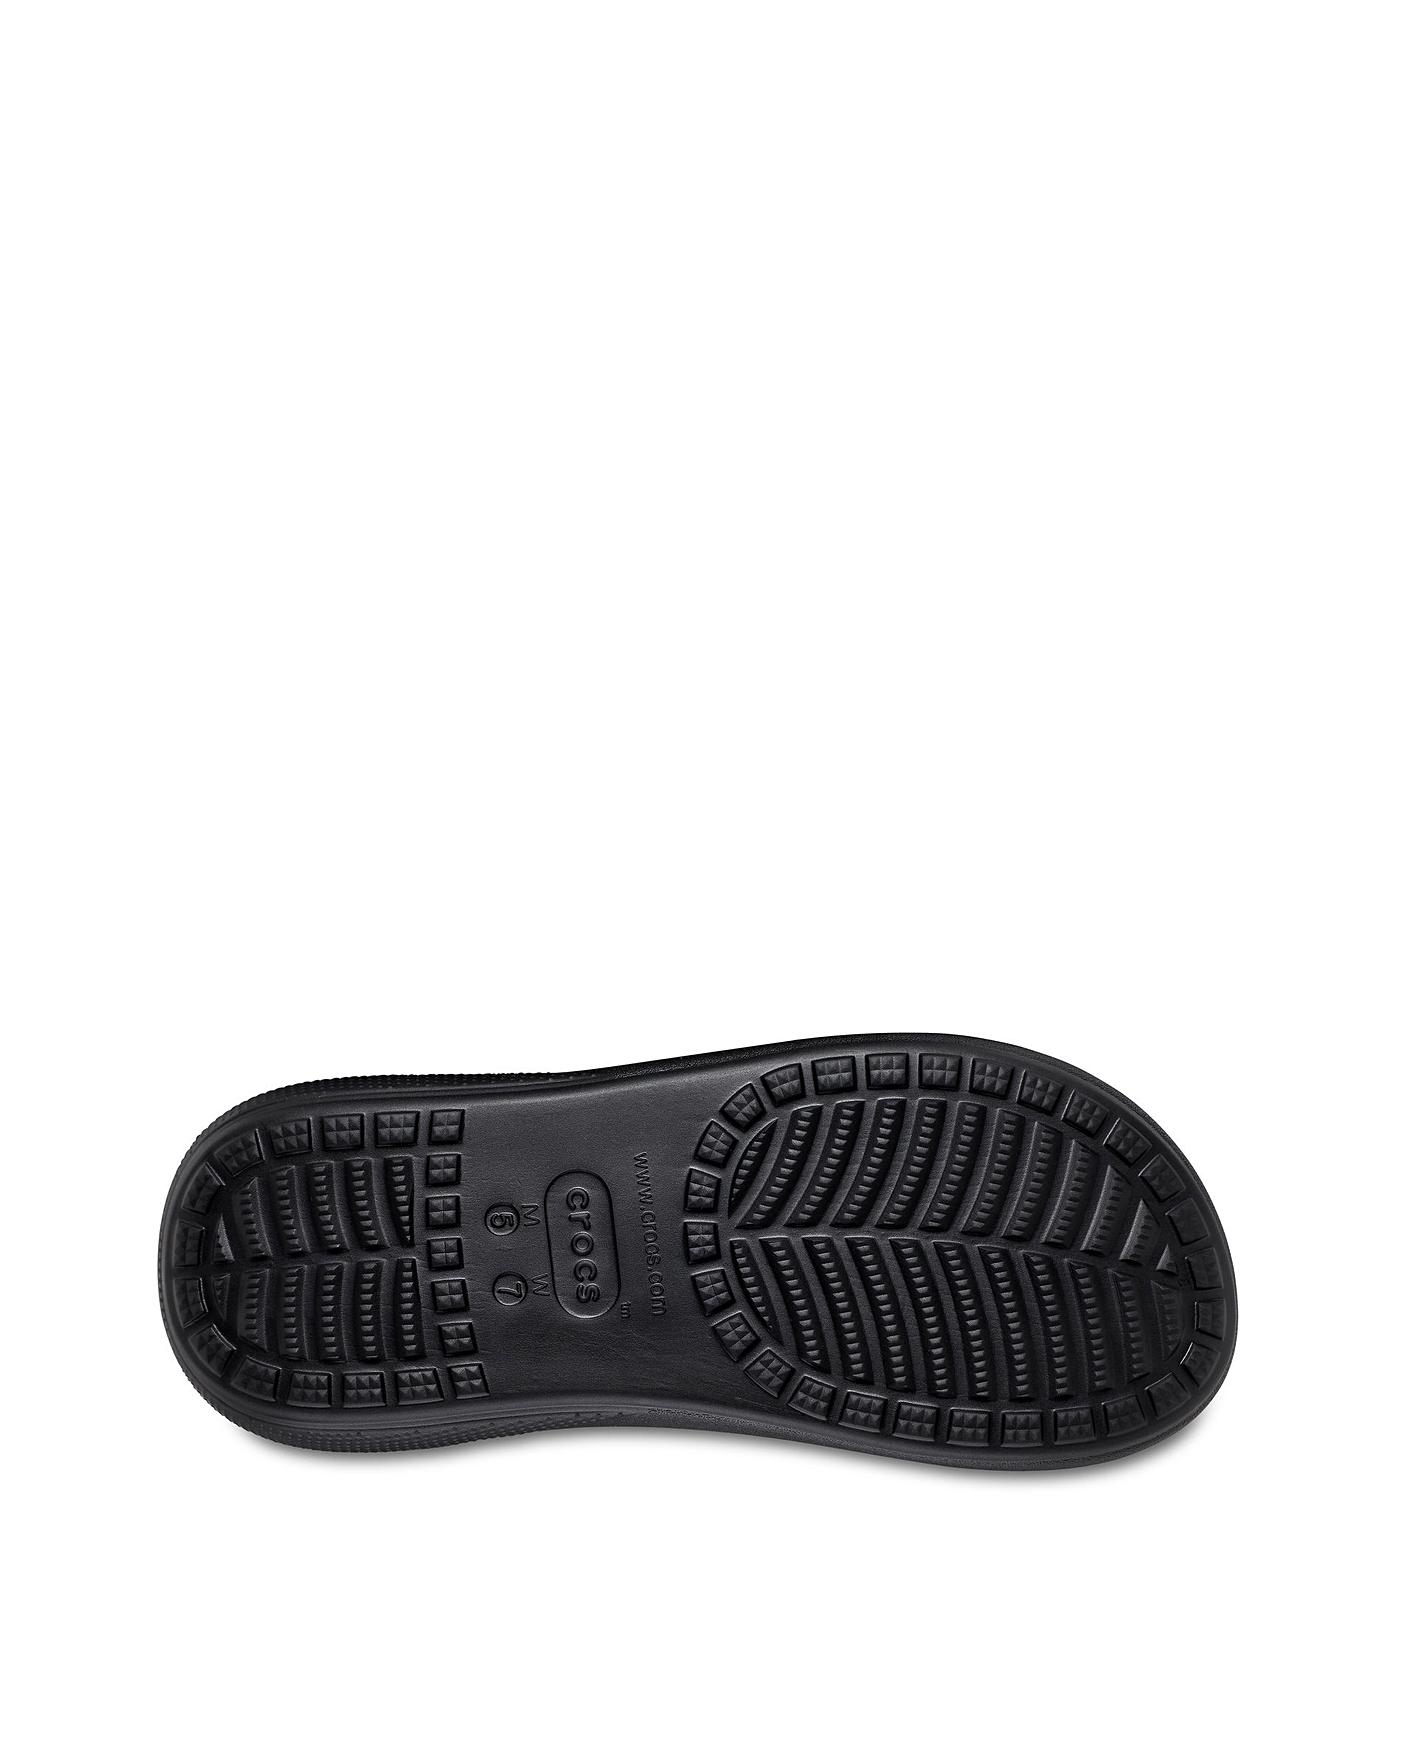 Crocs Crush Sandals D Fit | Ambrose Wilson